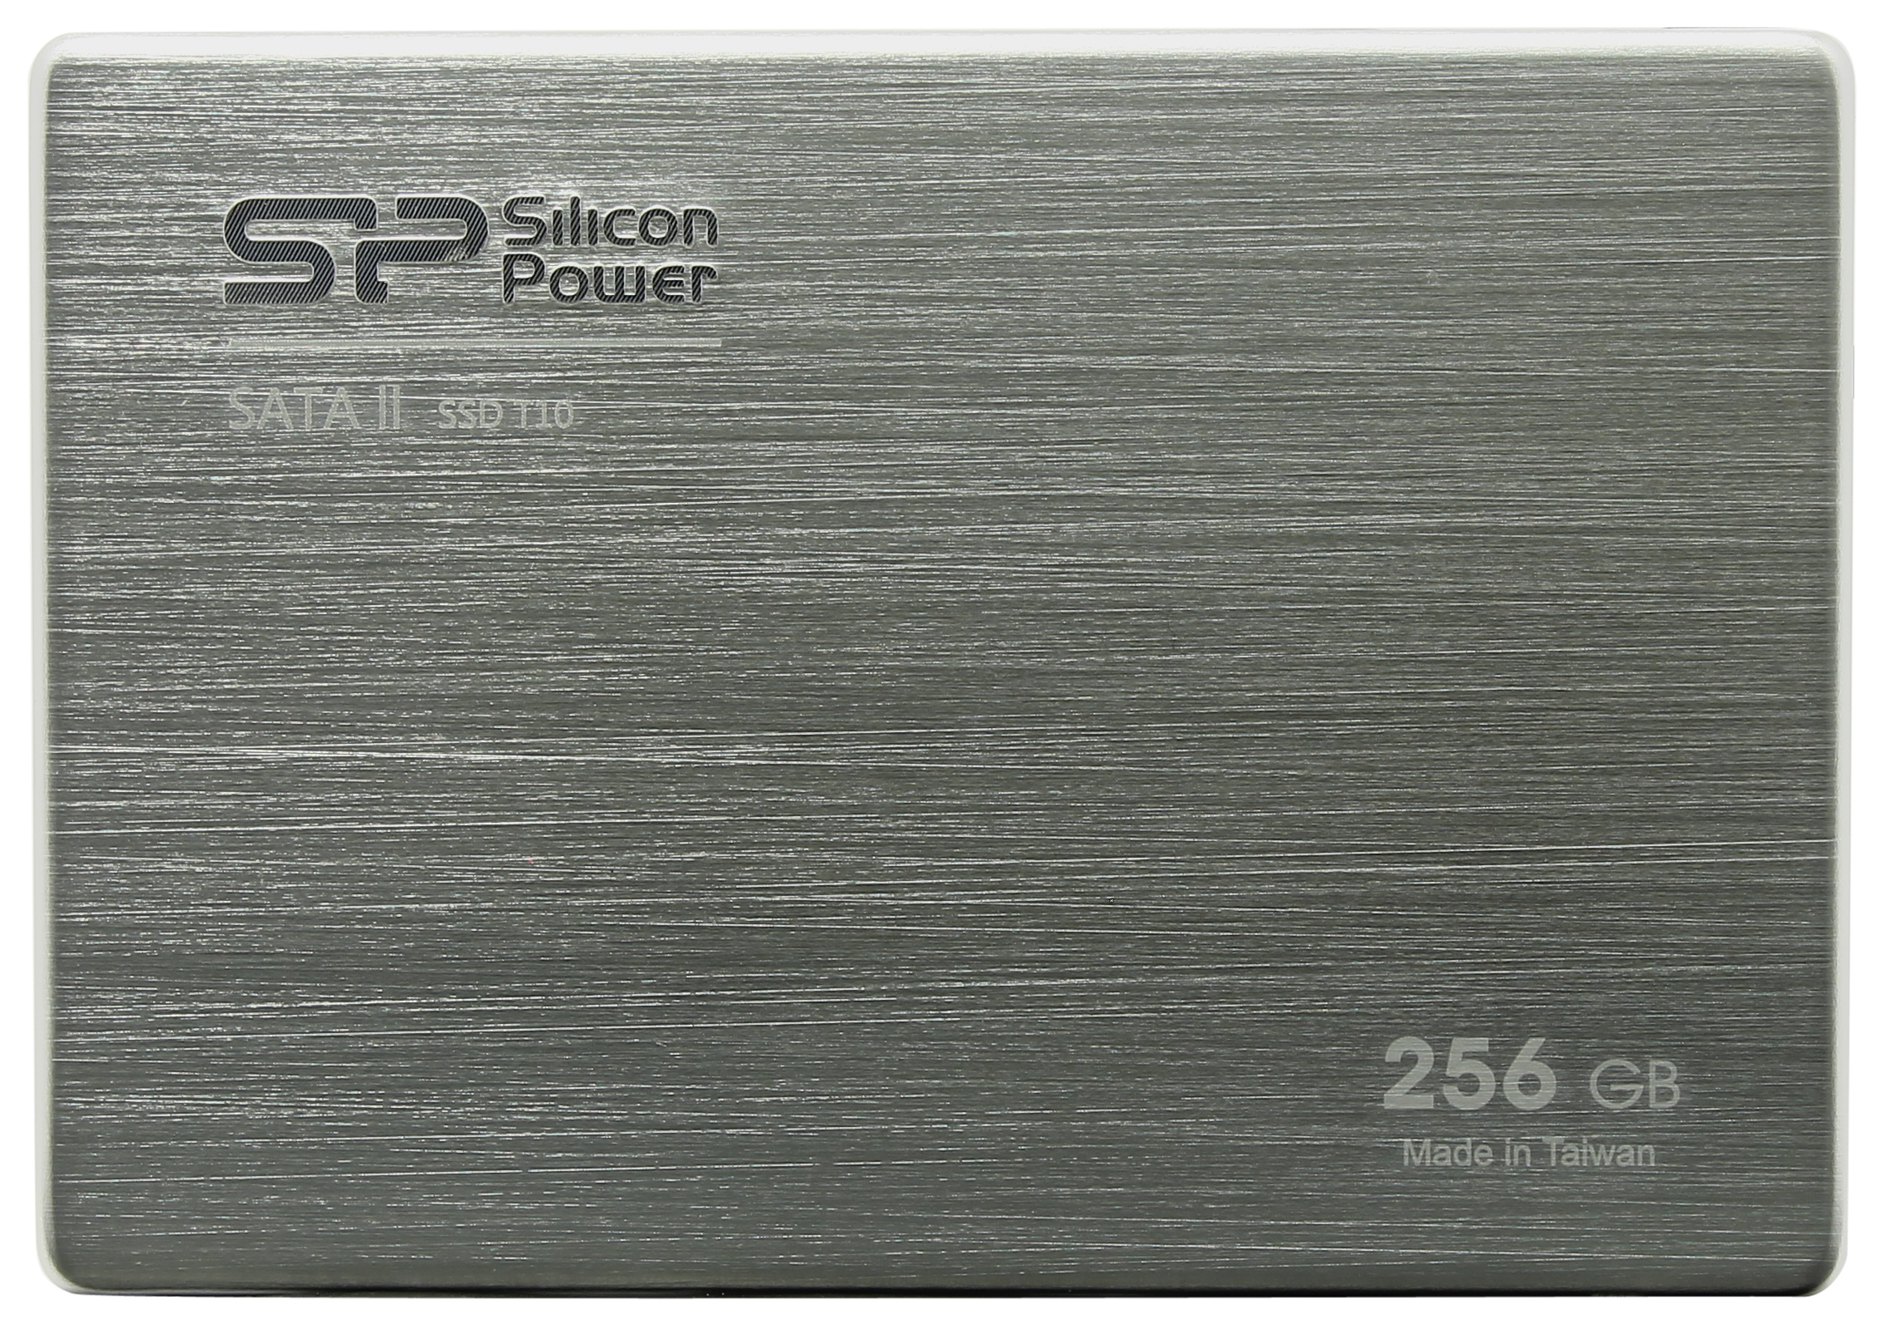 Техно пова 6 про 256 гб. SSD Silicon Power 256gb. Silicon Power ms70 256gb. Faster Fu-10 256gb. Технопарк 10 про 256 ГБ характеристики.